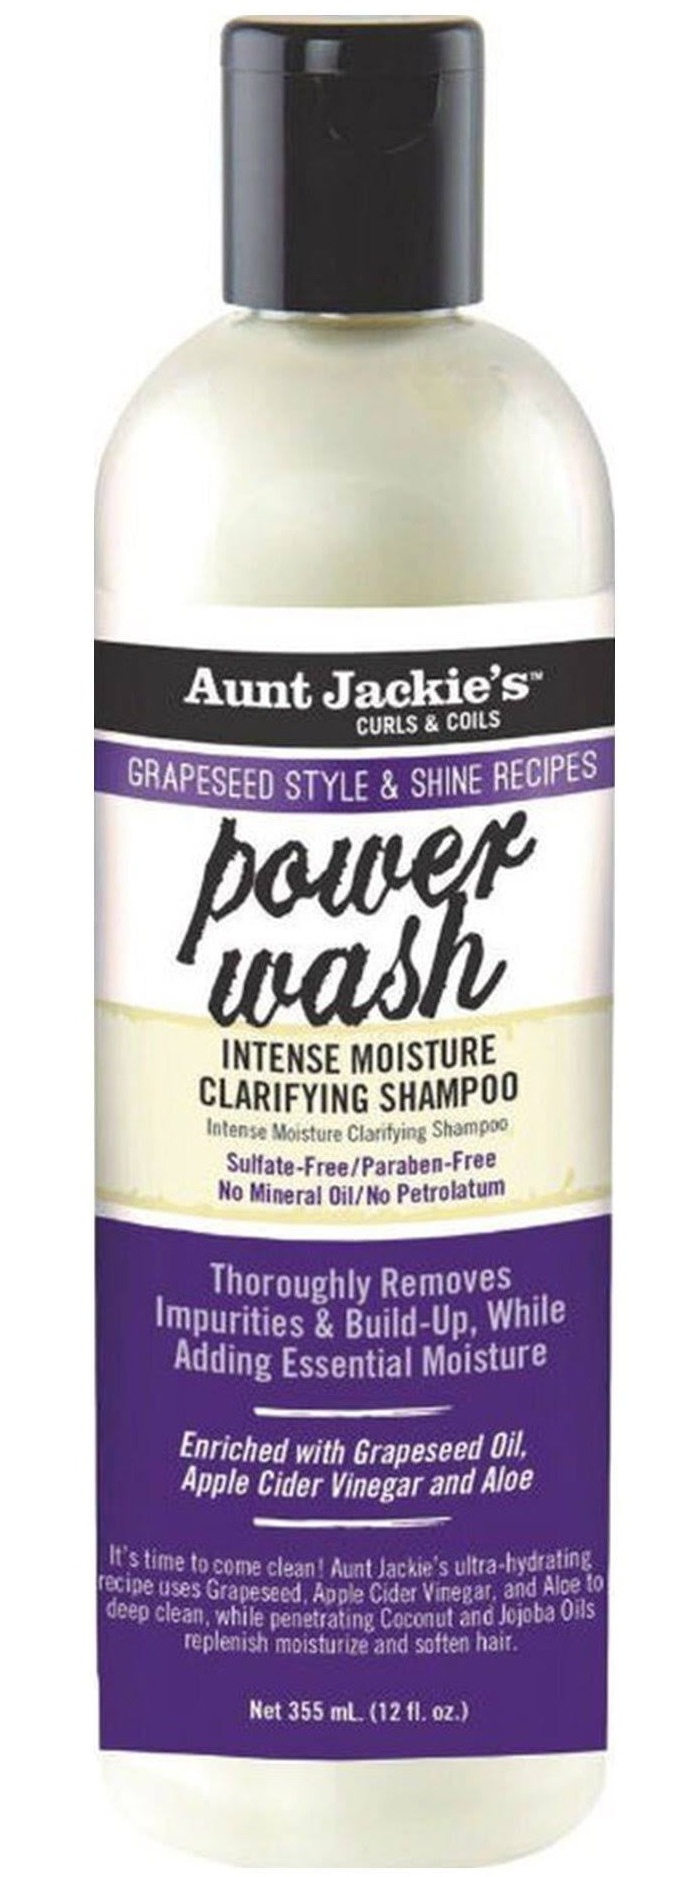 Aunt Jackie's Grapeseed Style & Shine Recipes Power Wash Intense Moisture Clarifying Shampoo